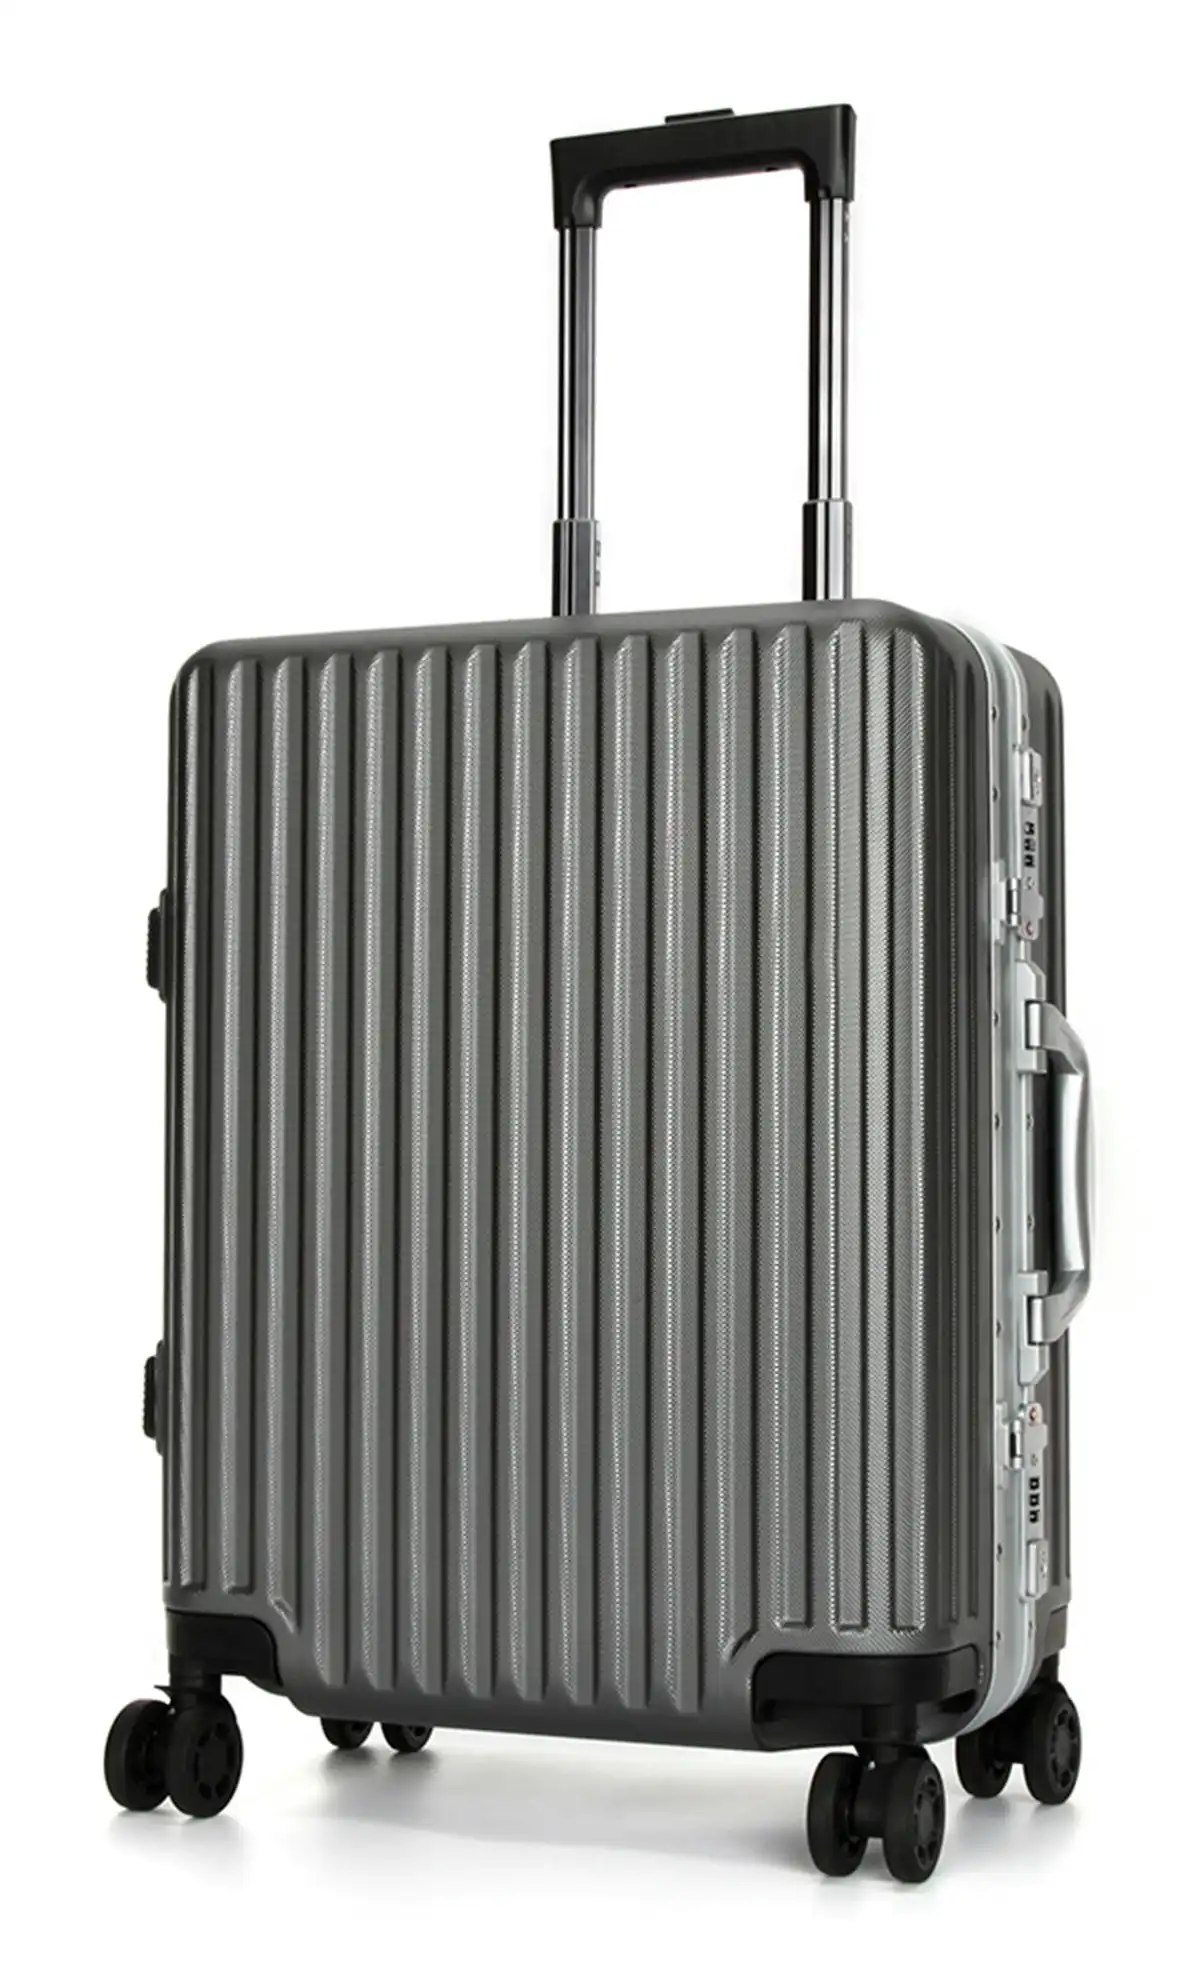 Suissewin Swiss Aluminium Luggage Suitcase Lightweight With TSA Locker 8 Wheels Check in Large Hardcase SN7619B Grey